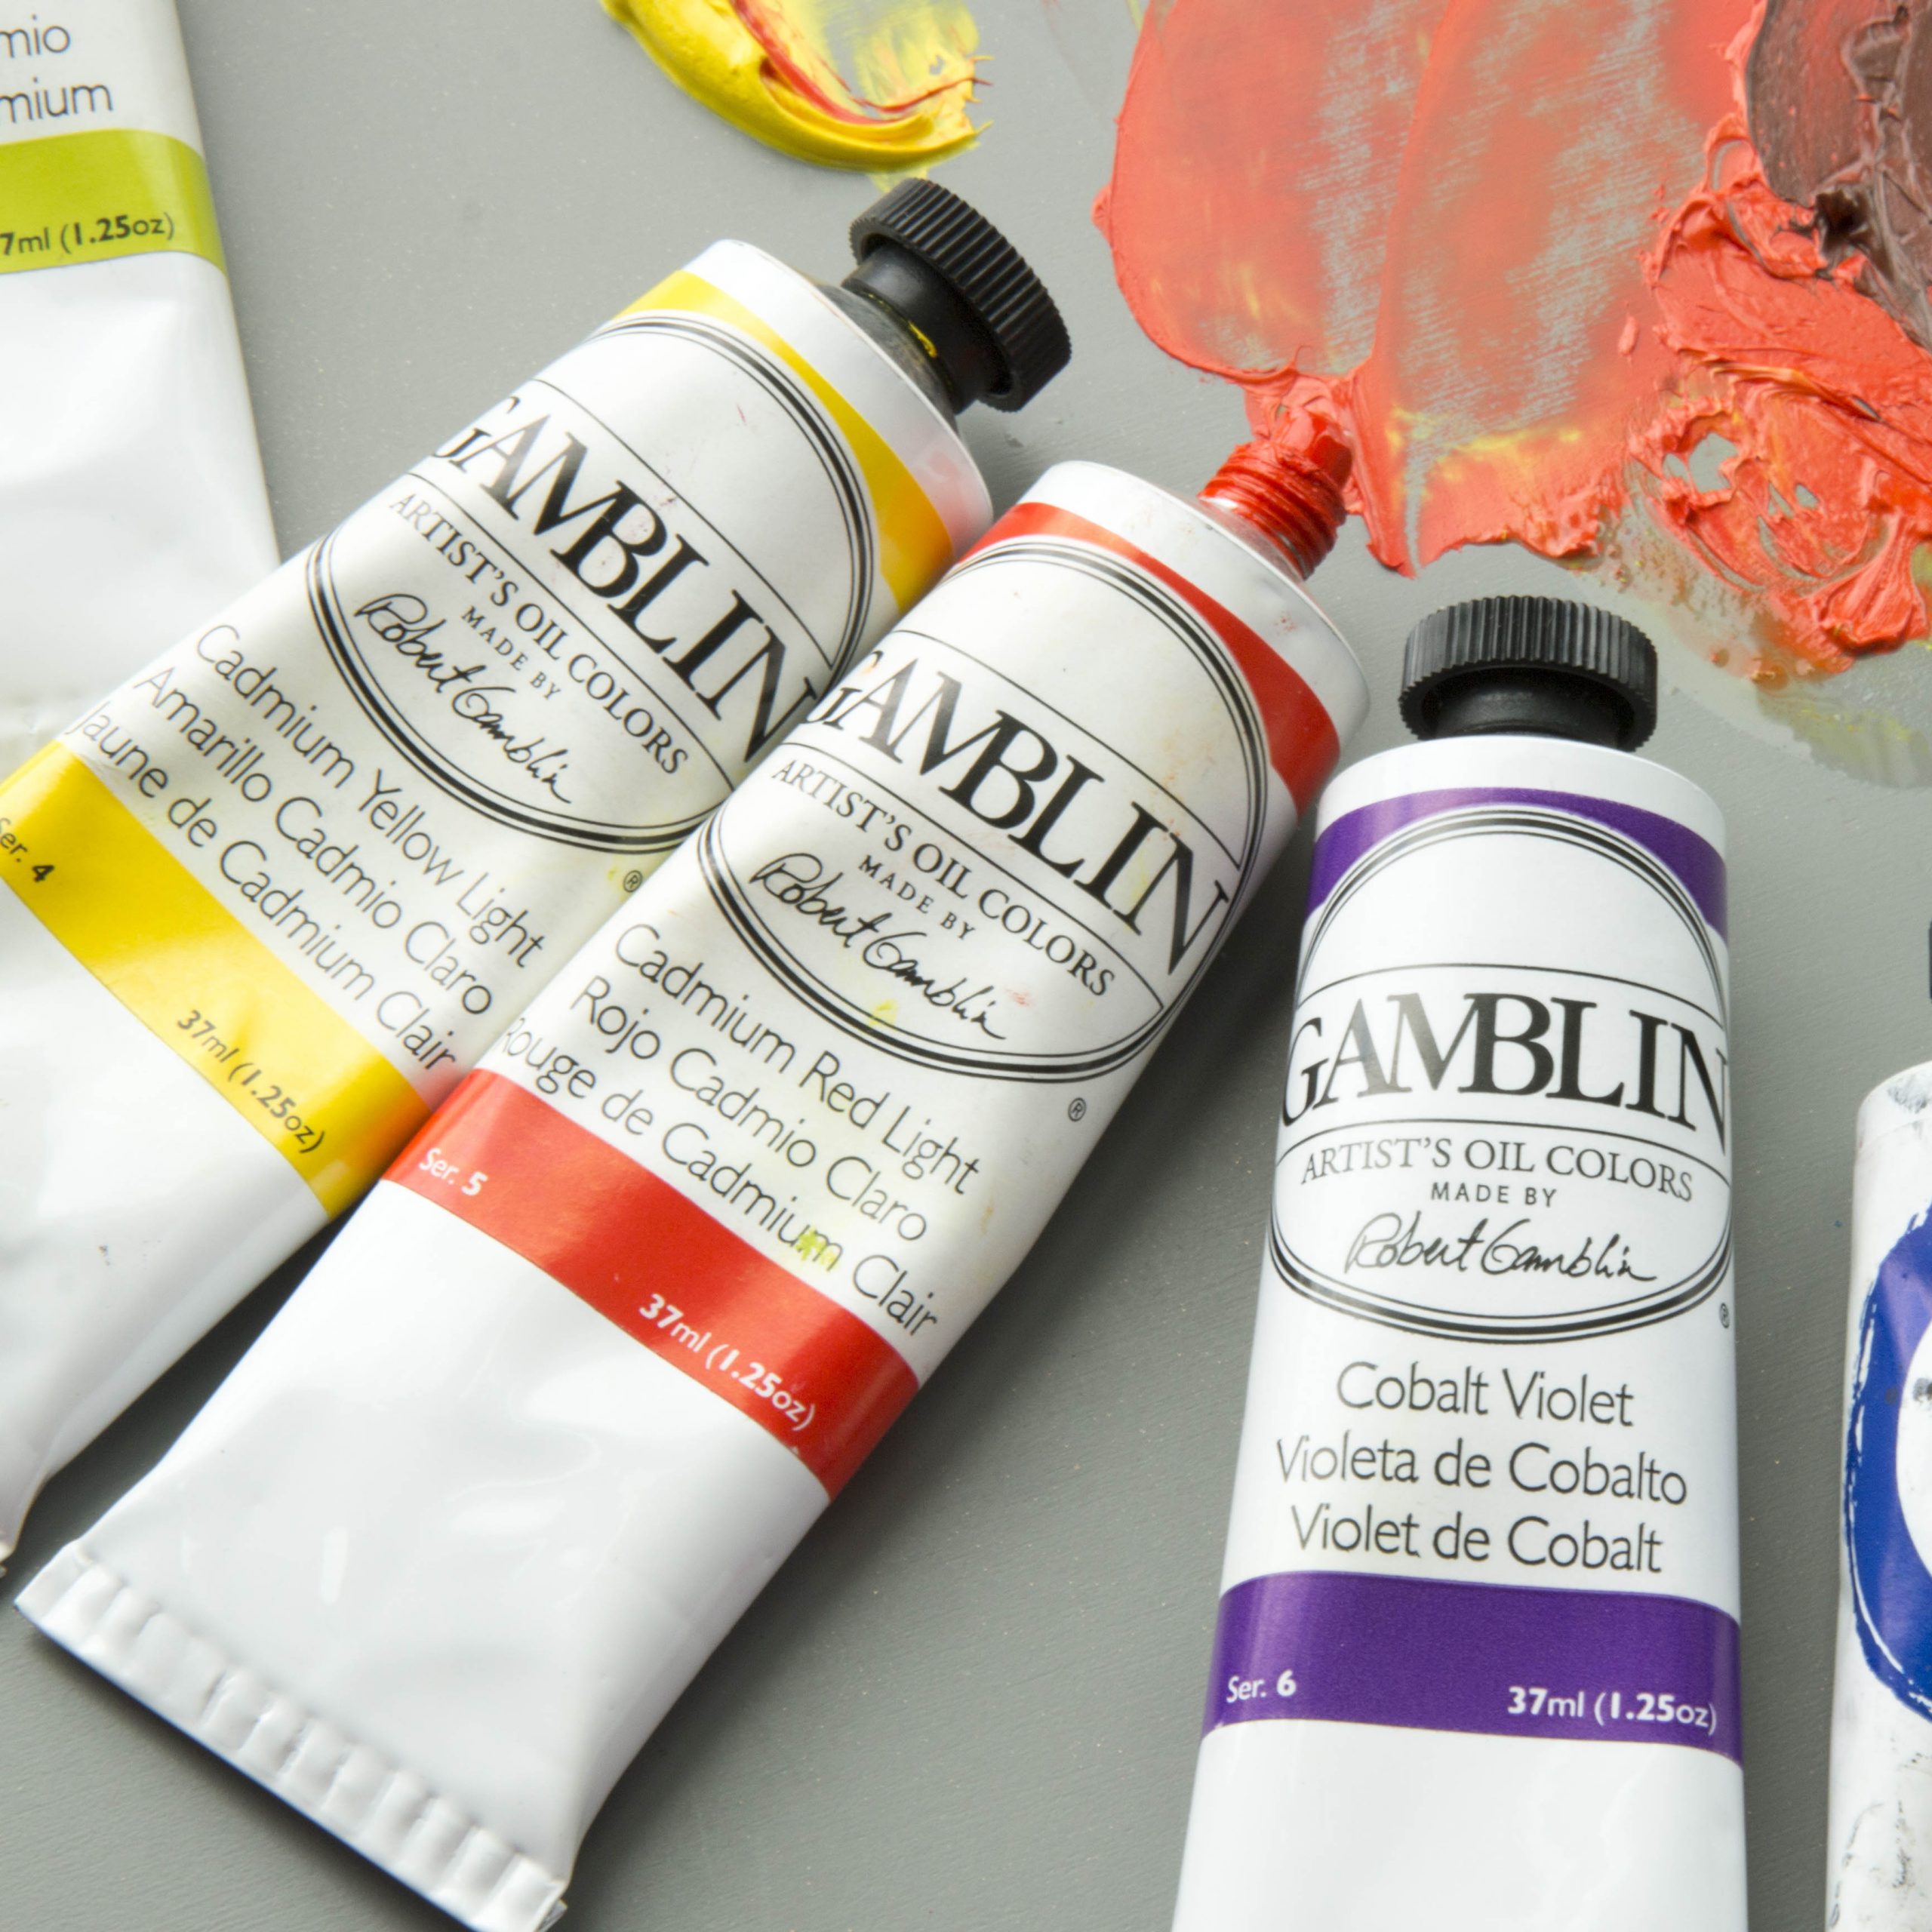 Gamblin Artist's Oil Colors 37ml Tubes – LEAD TIN